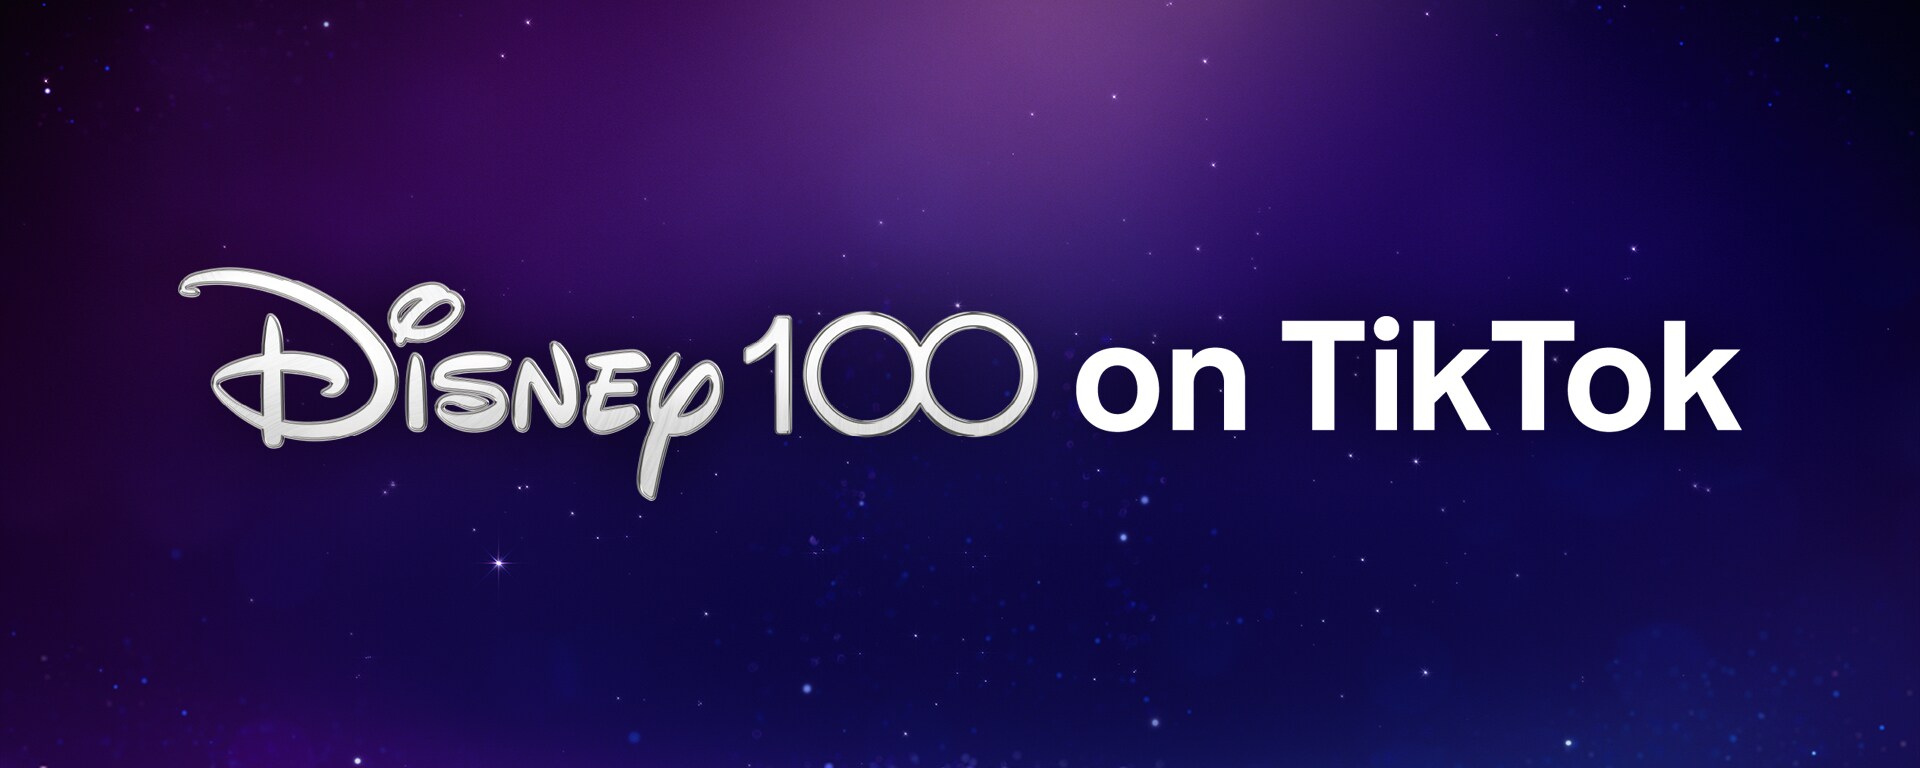 Disney 100 on TikTok